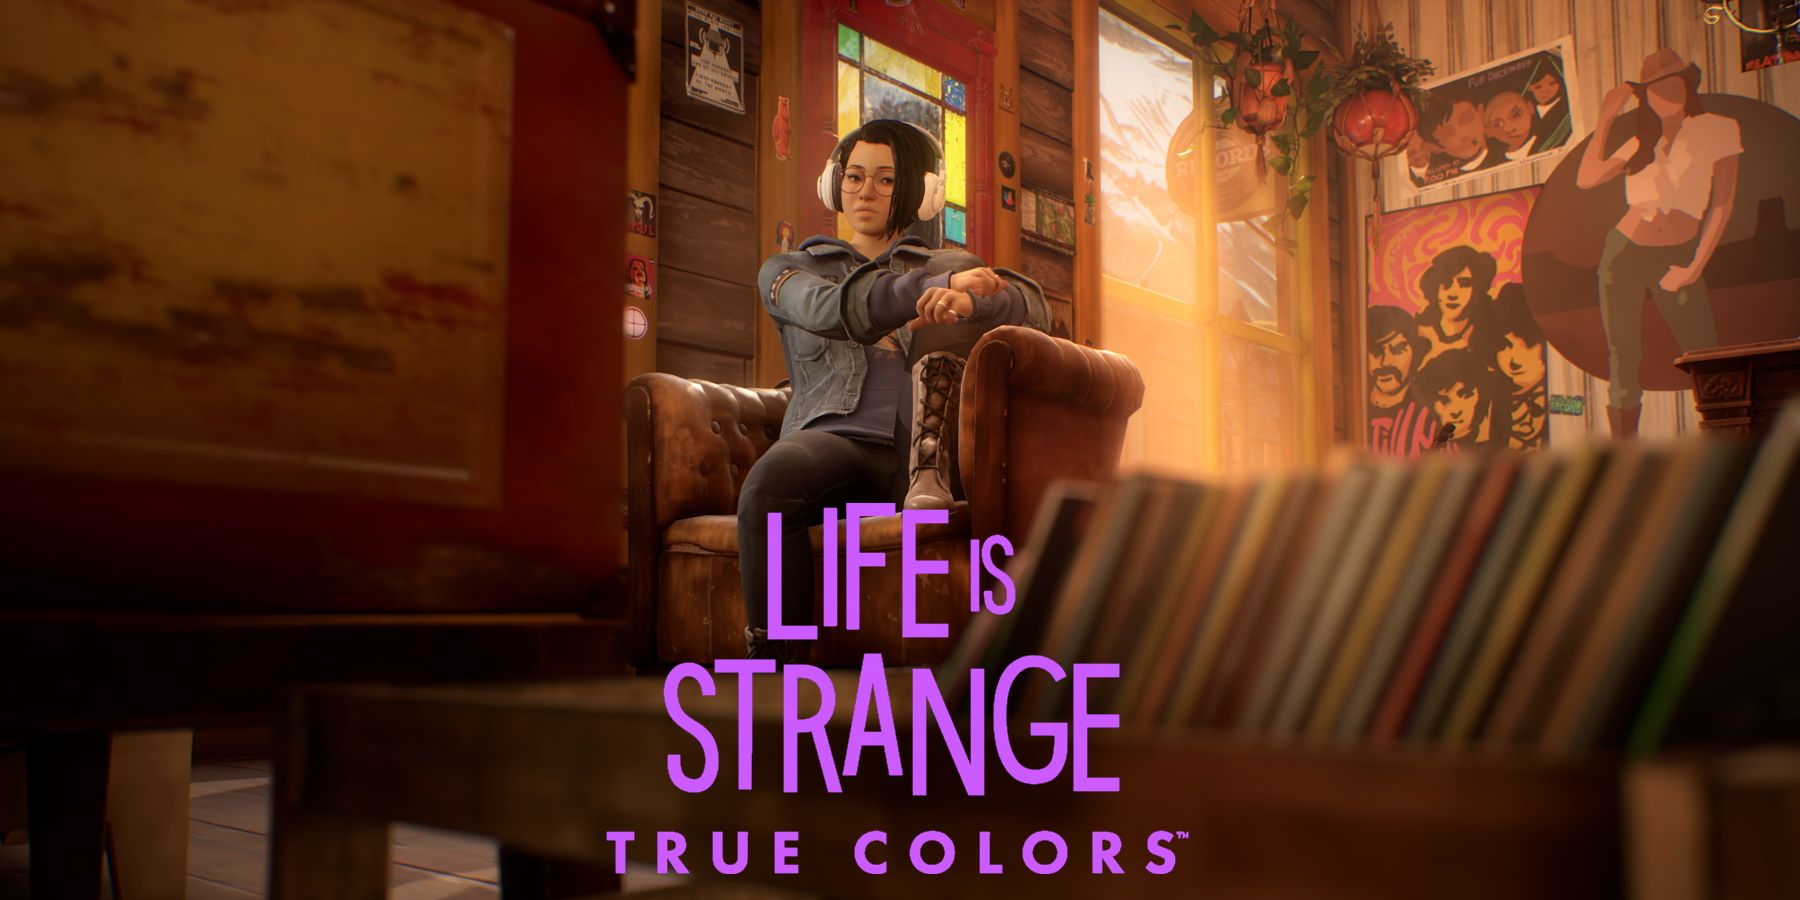 Life is Strange True Colors Алекс Чен в музыкальном магазине слушает музыку с логотипом